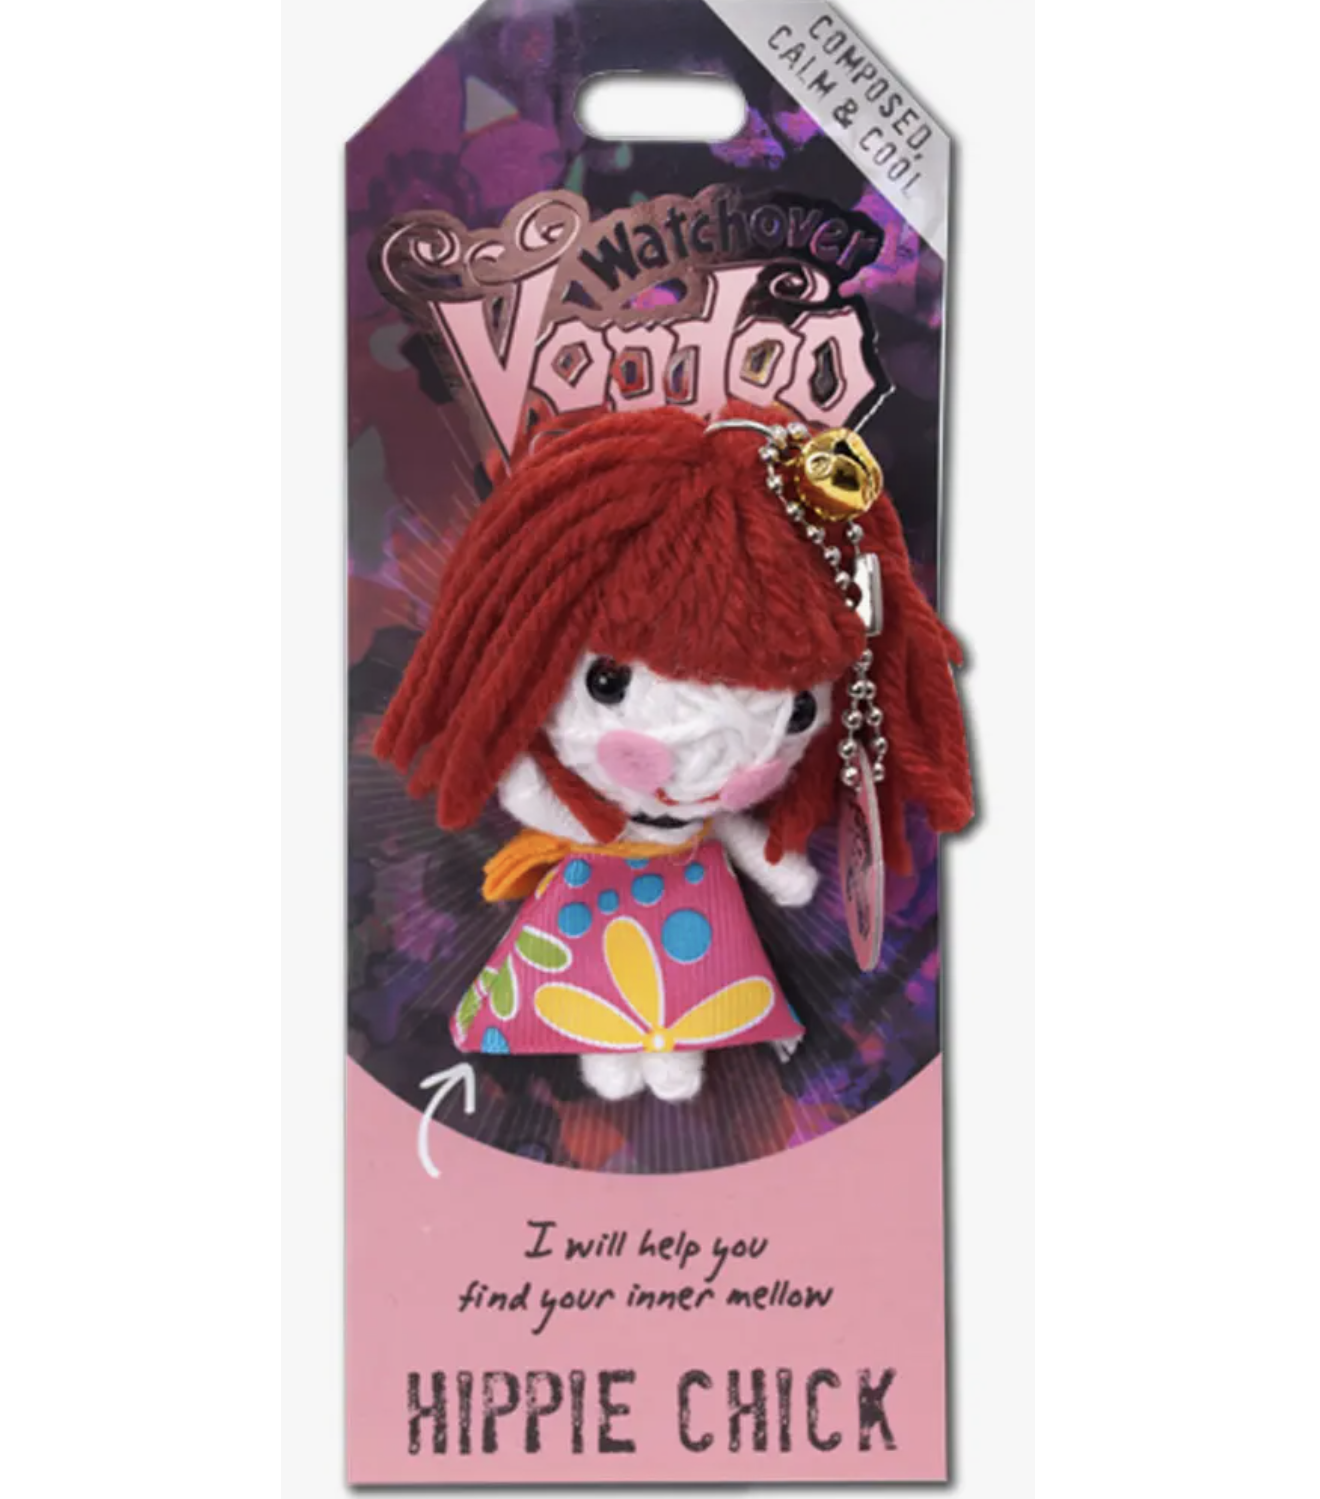 Hippie Chick Voodoo Doll